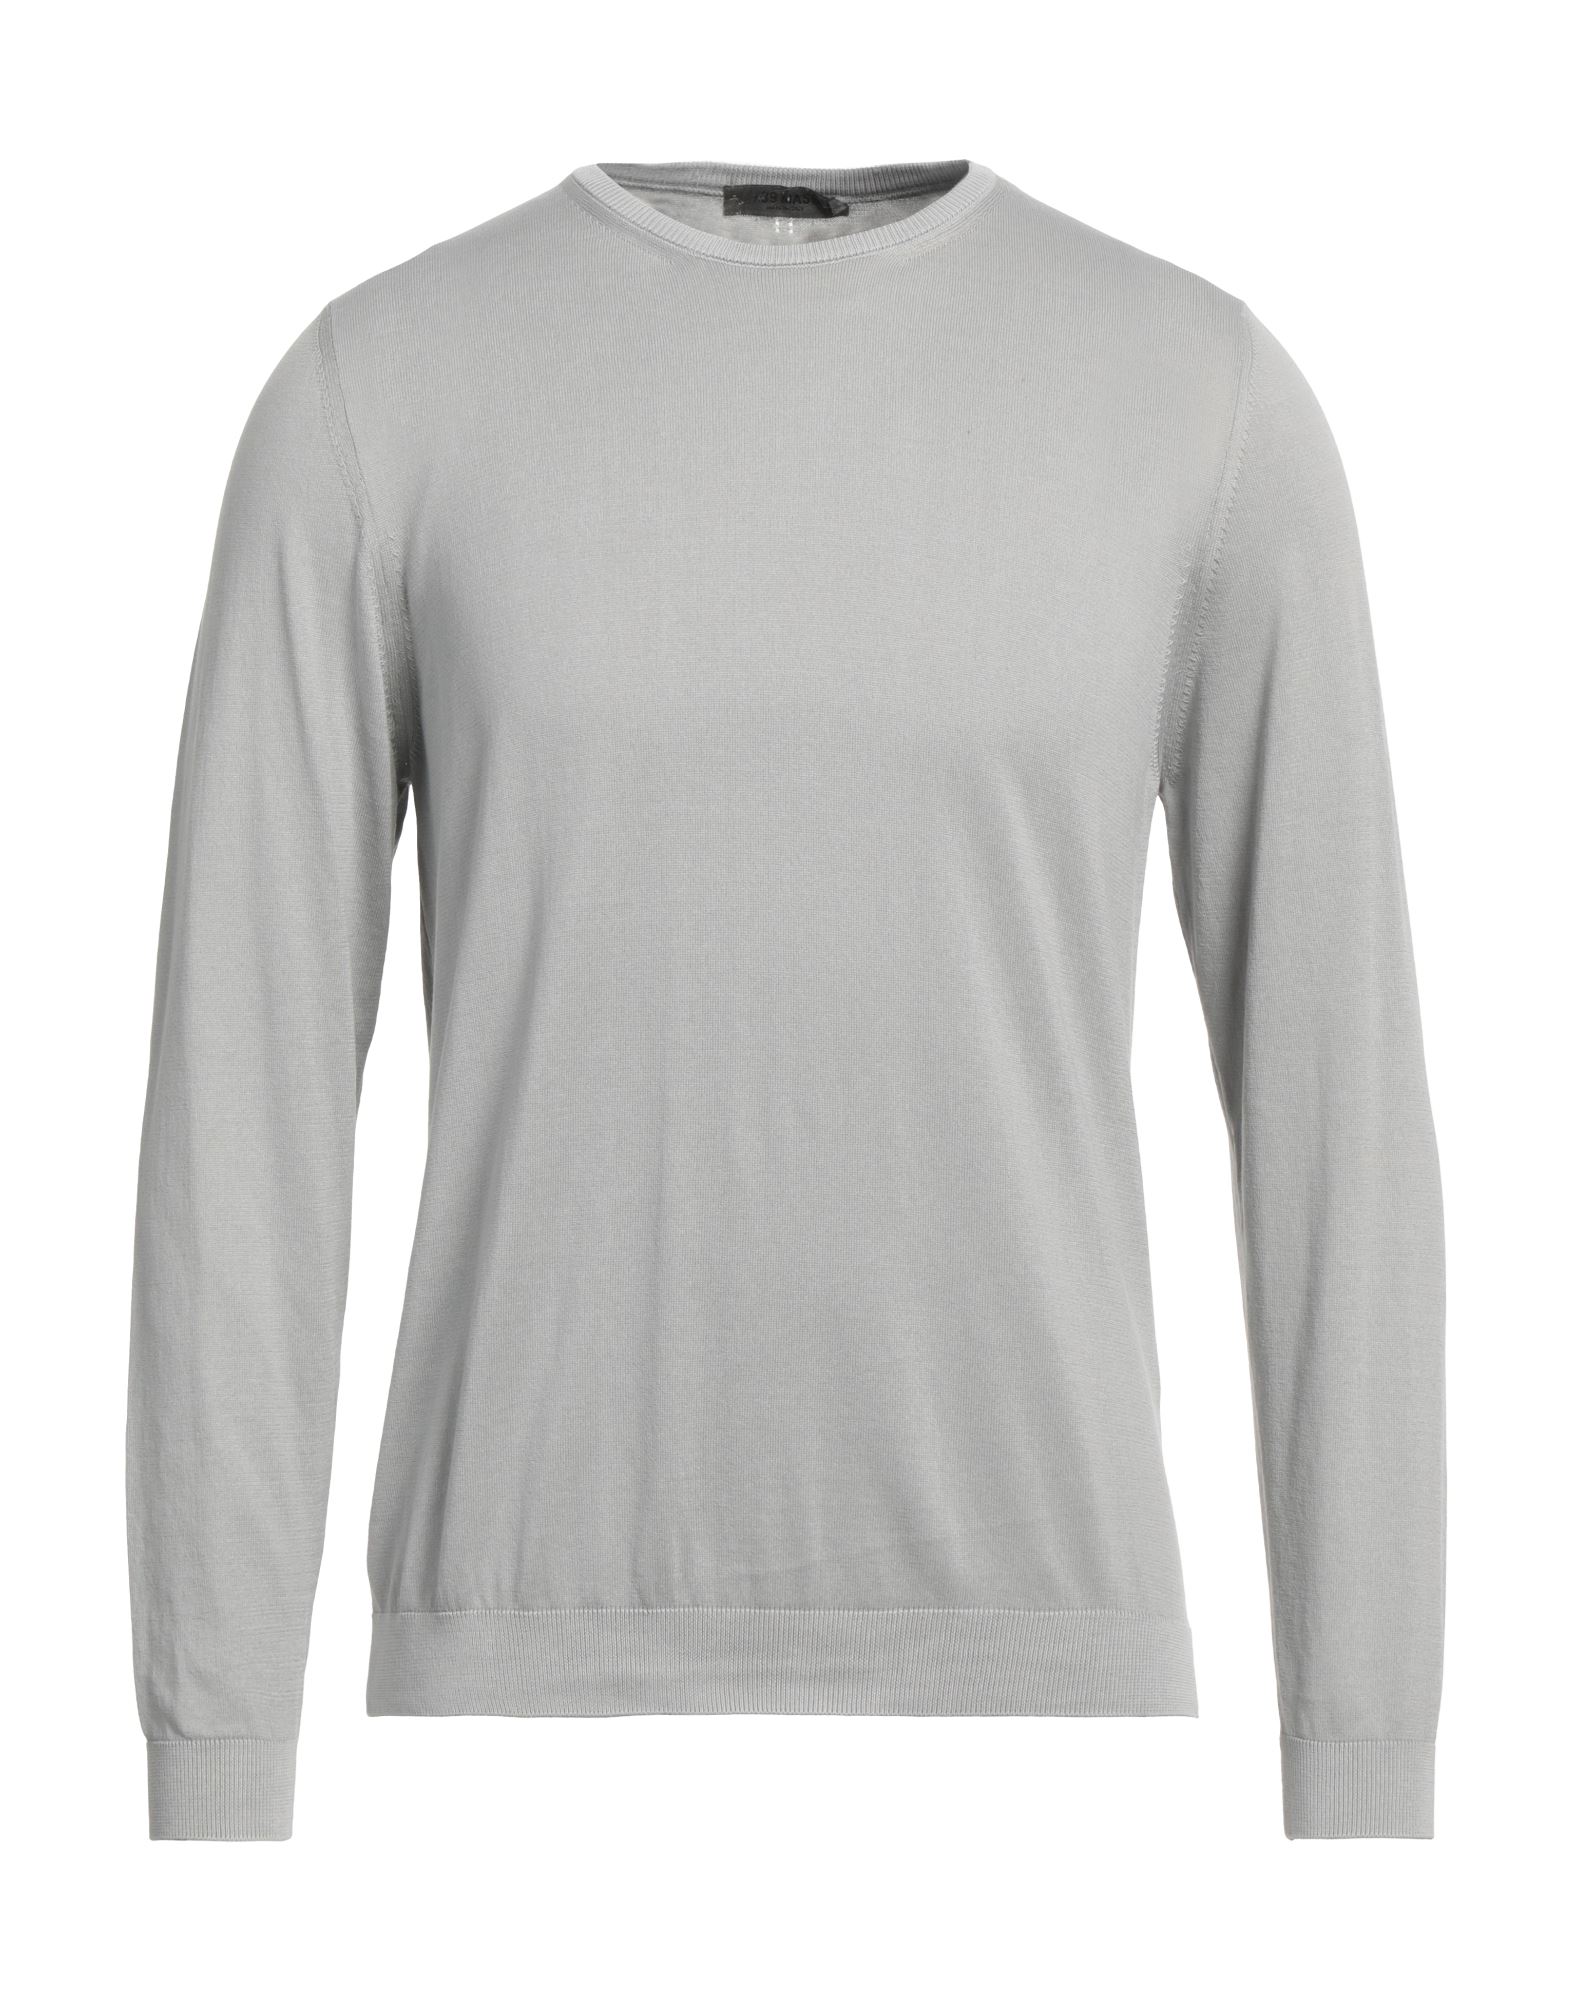 +39 Masq Man Sweater Light Grey Size L Cotton